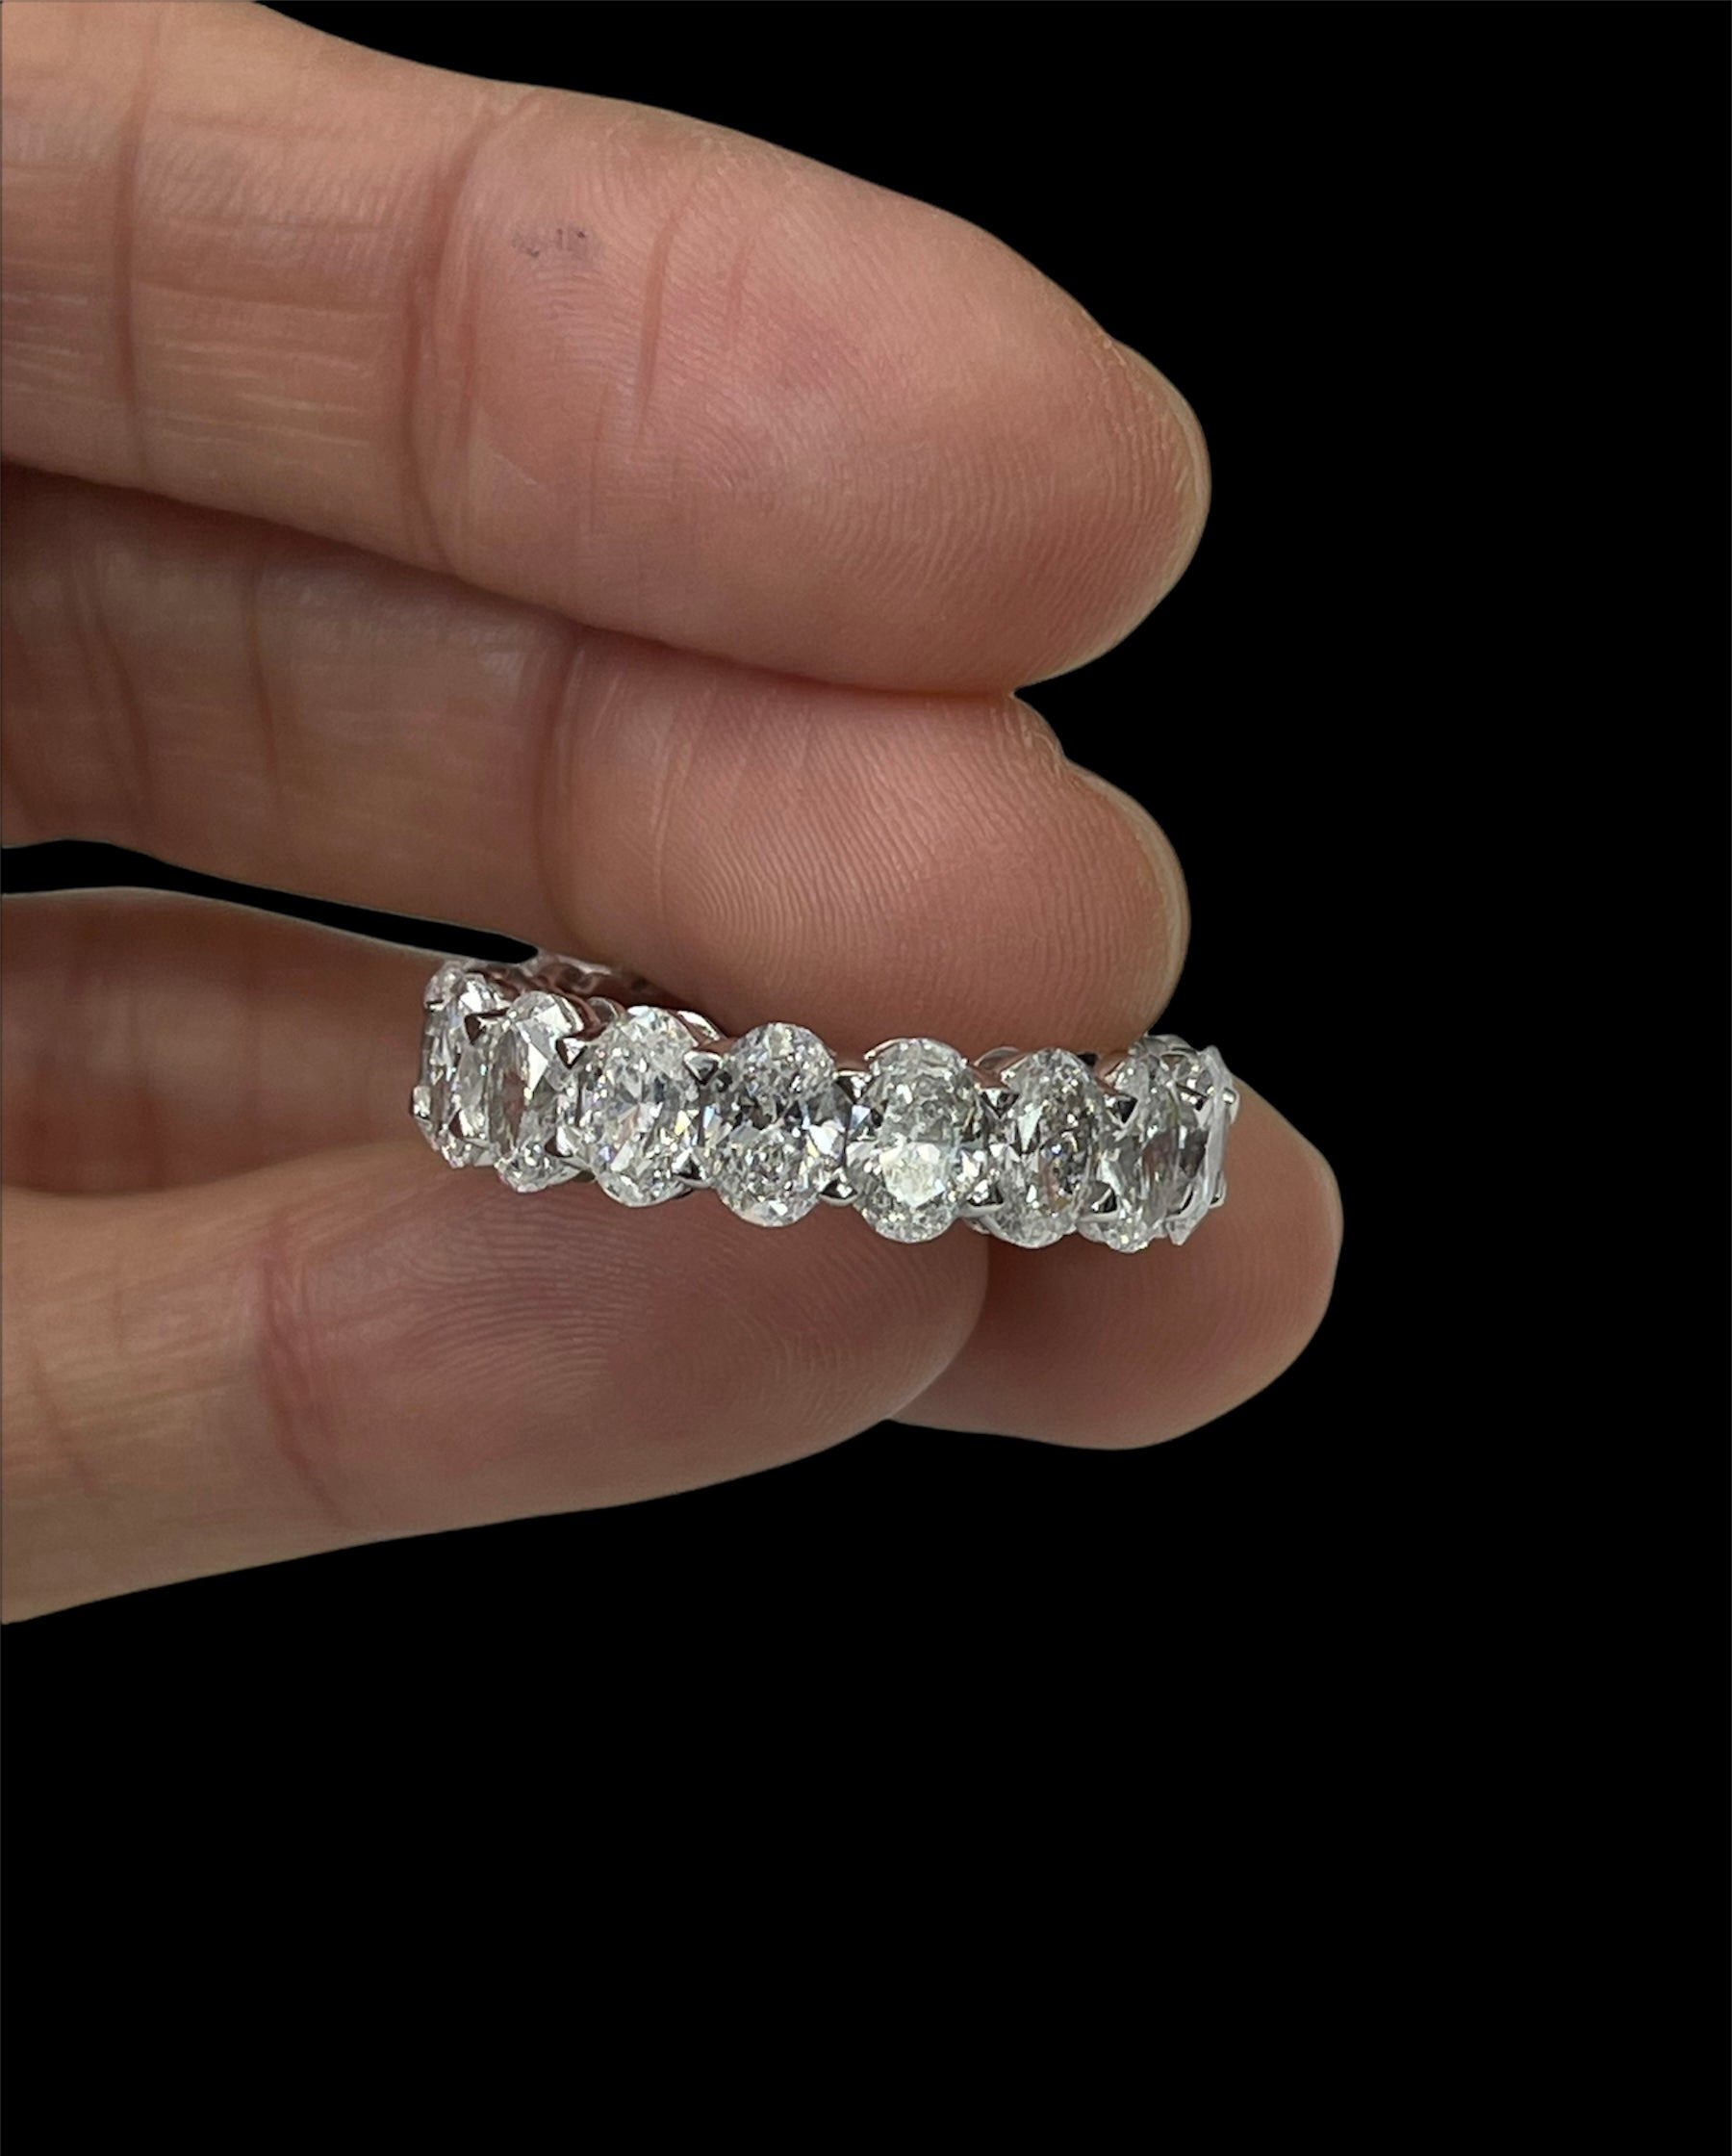 Oval Eternity Diamond Band White Gold 14kt 5.63 Carats D-F Color VS-2